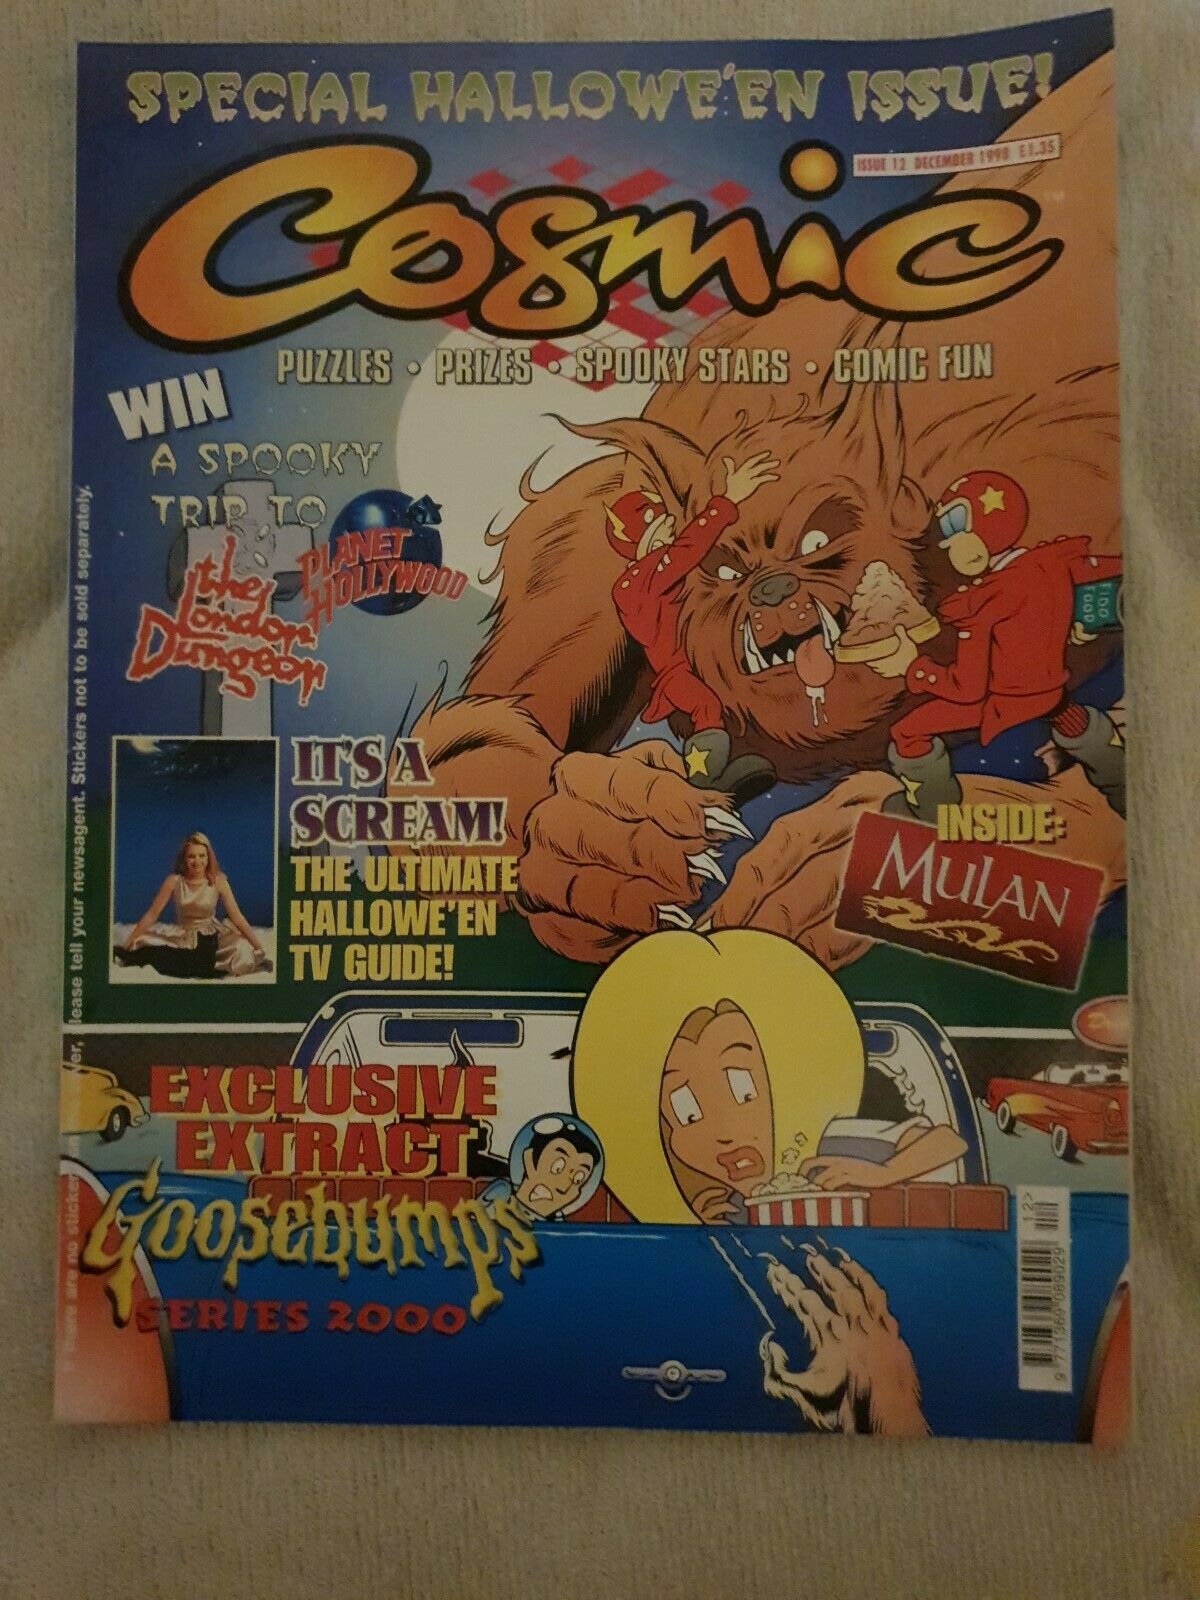 Cosmic Volume 2, No. 12, December 1998